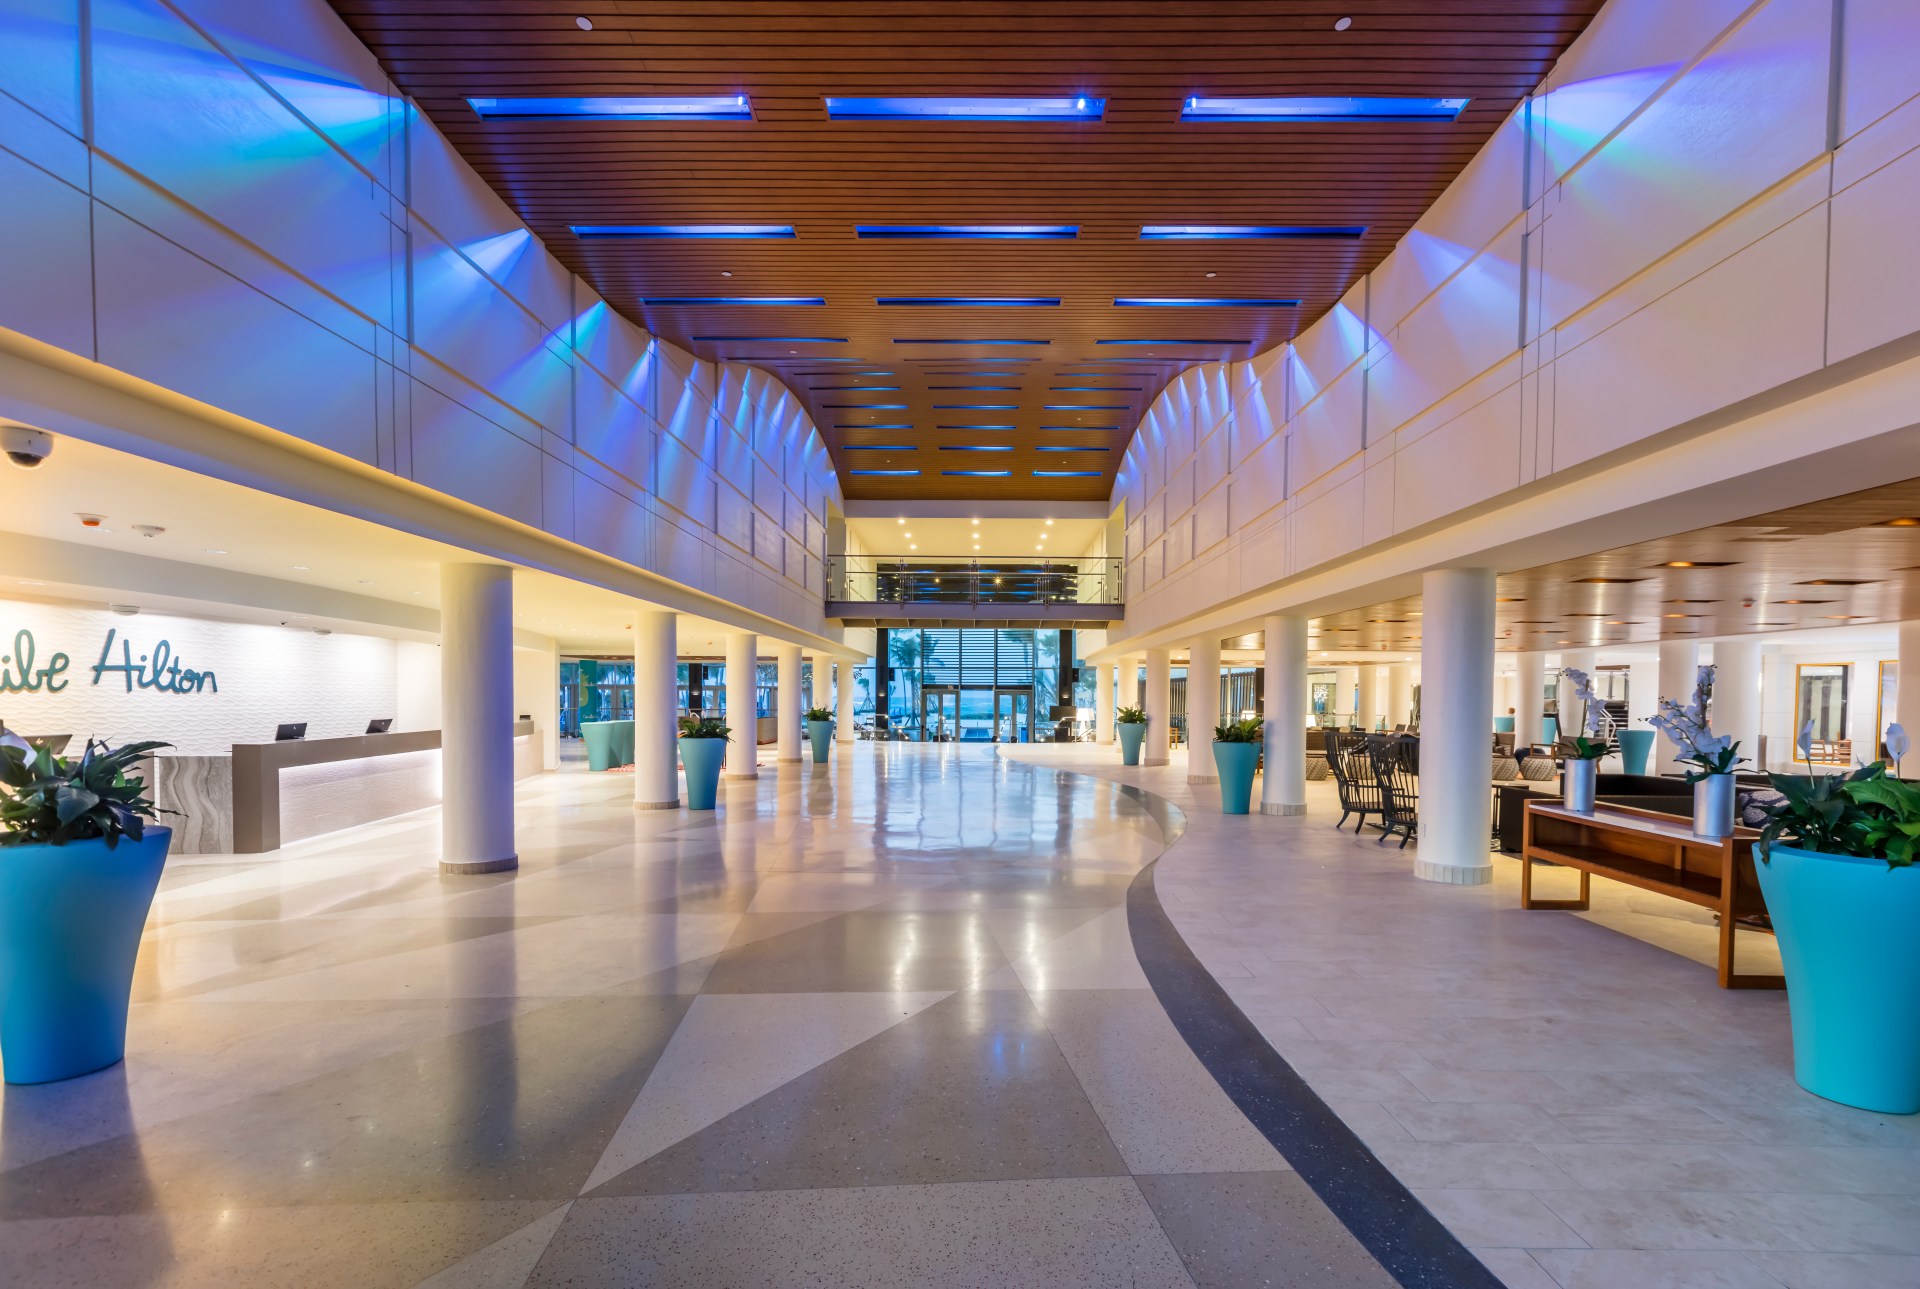 Caribe Hilton - Lobby